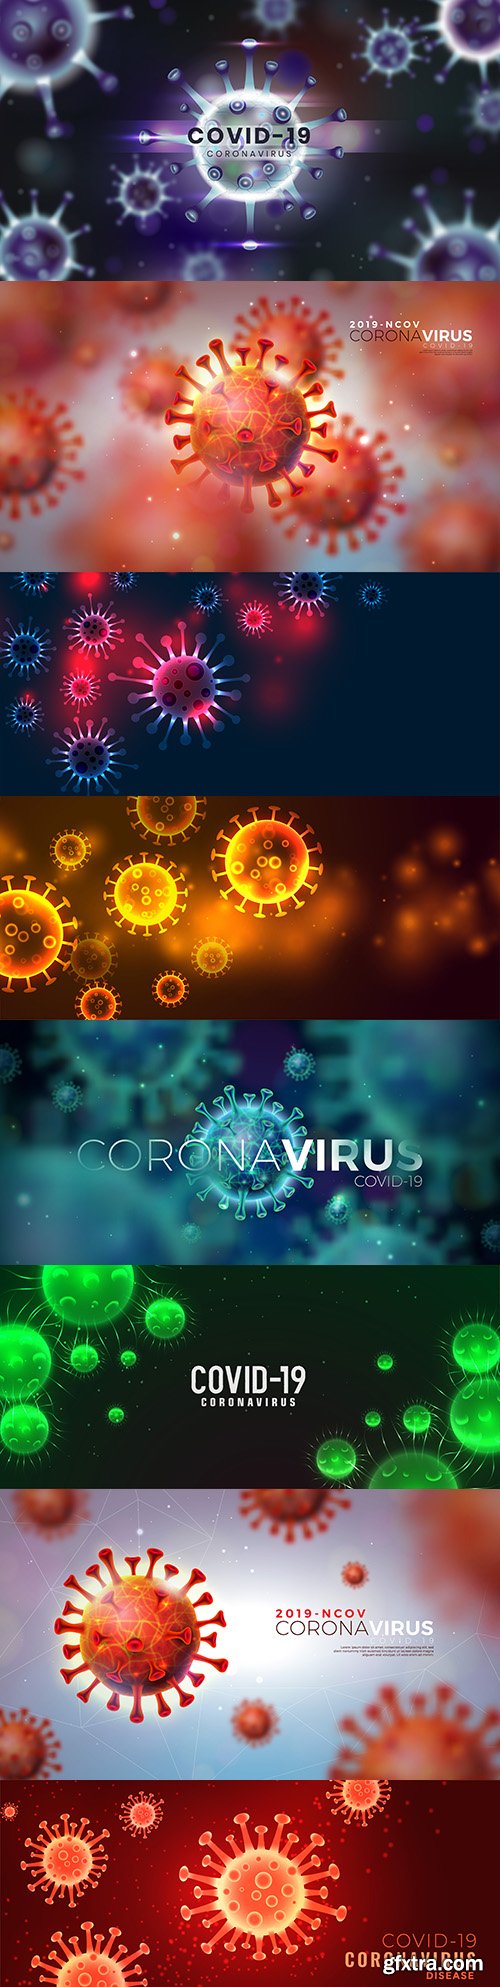 Covid-19 coronavirus flash design with virus cell background
